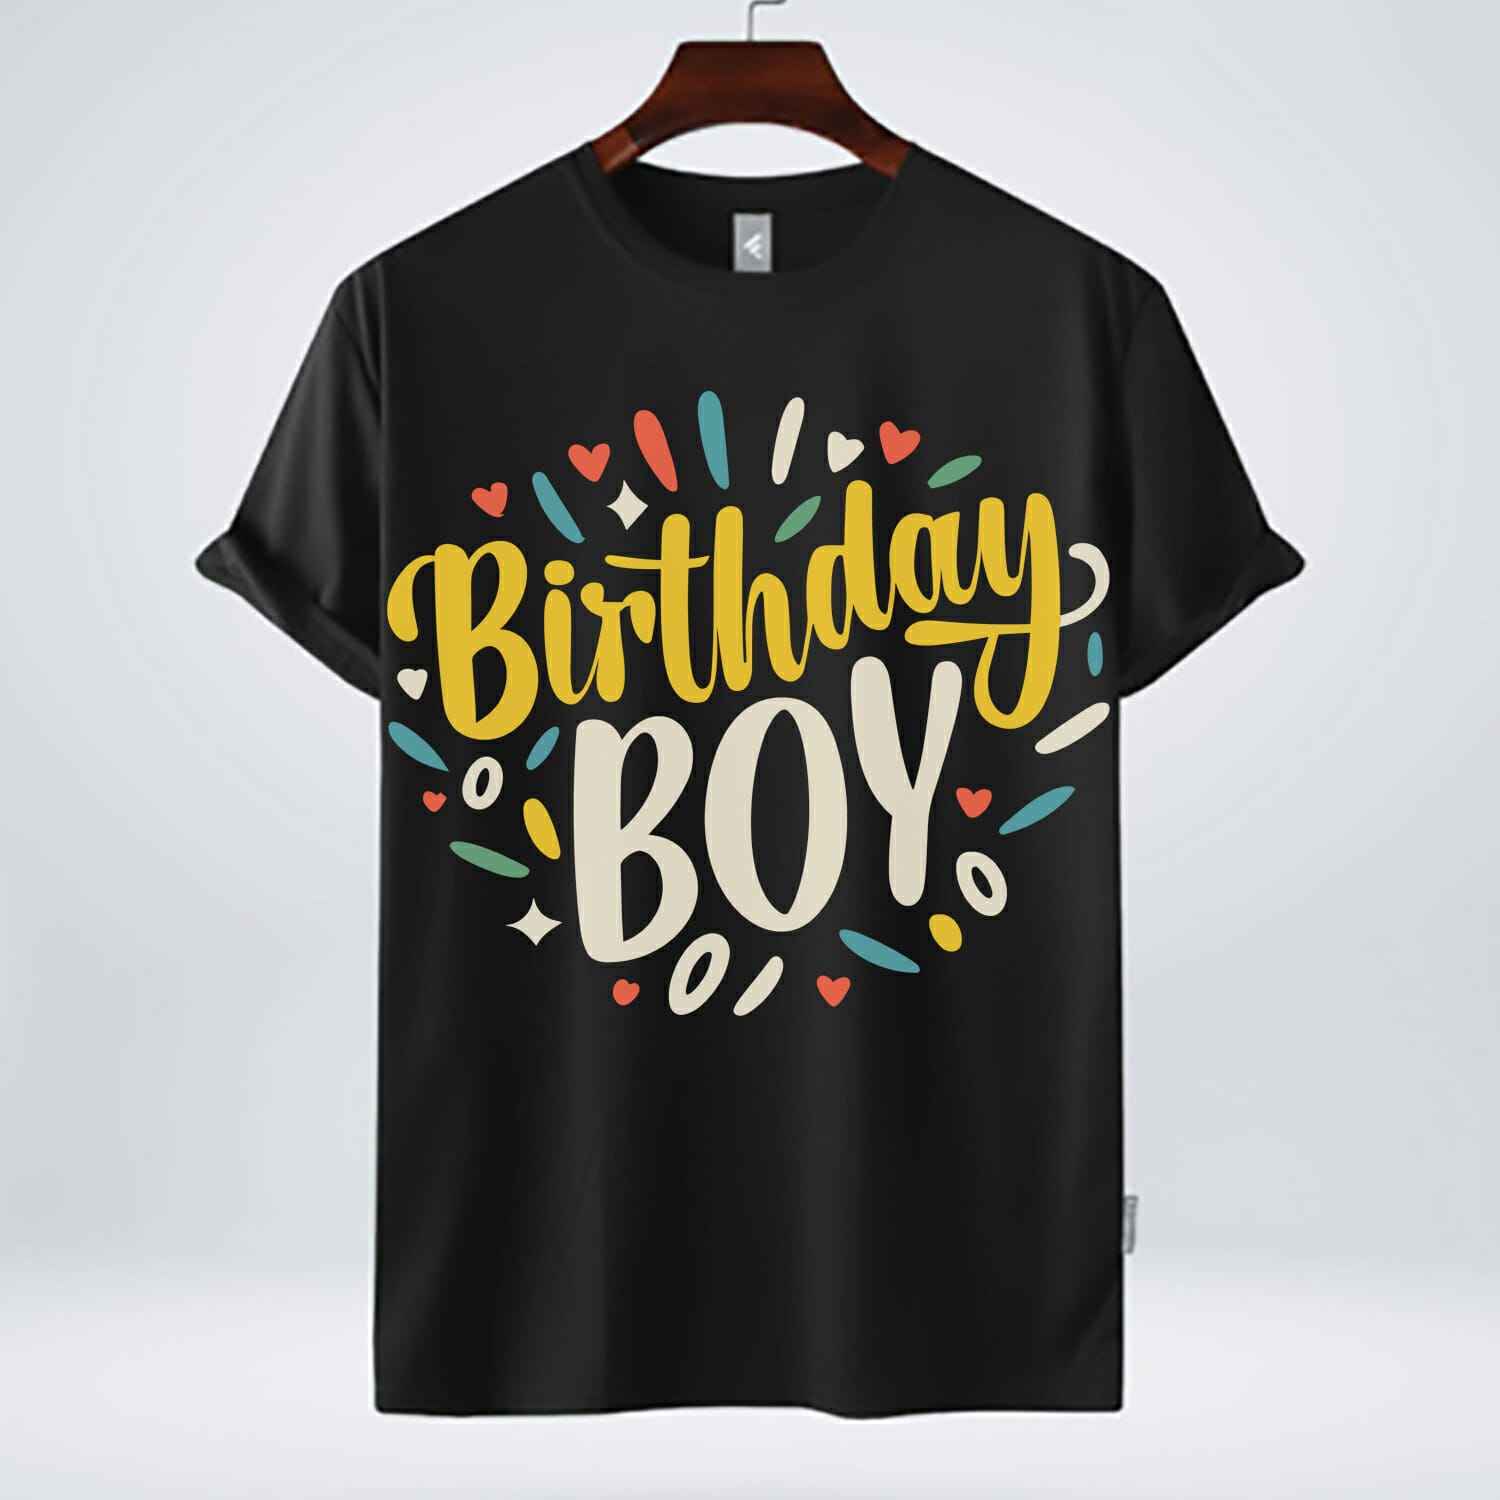 Free T-shirt Design Birthday Boy